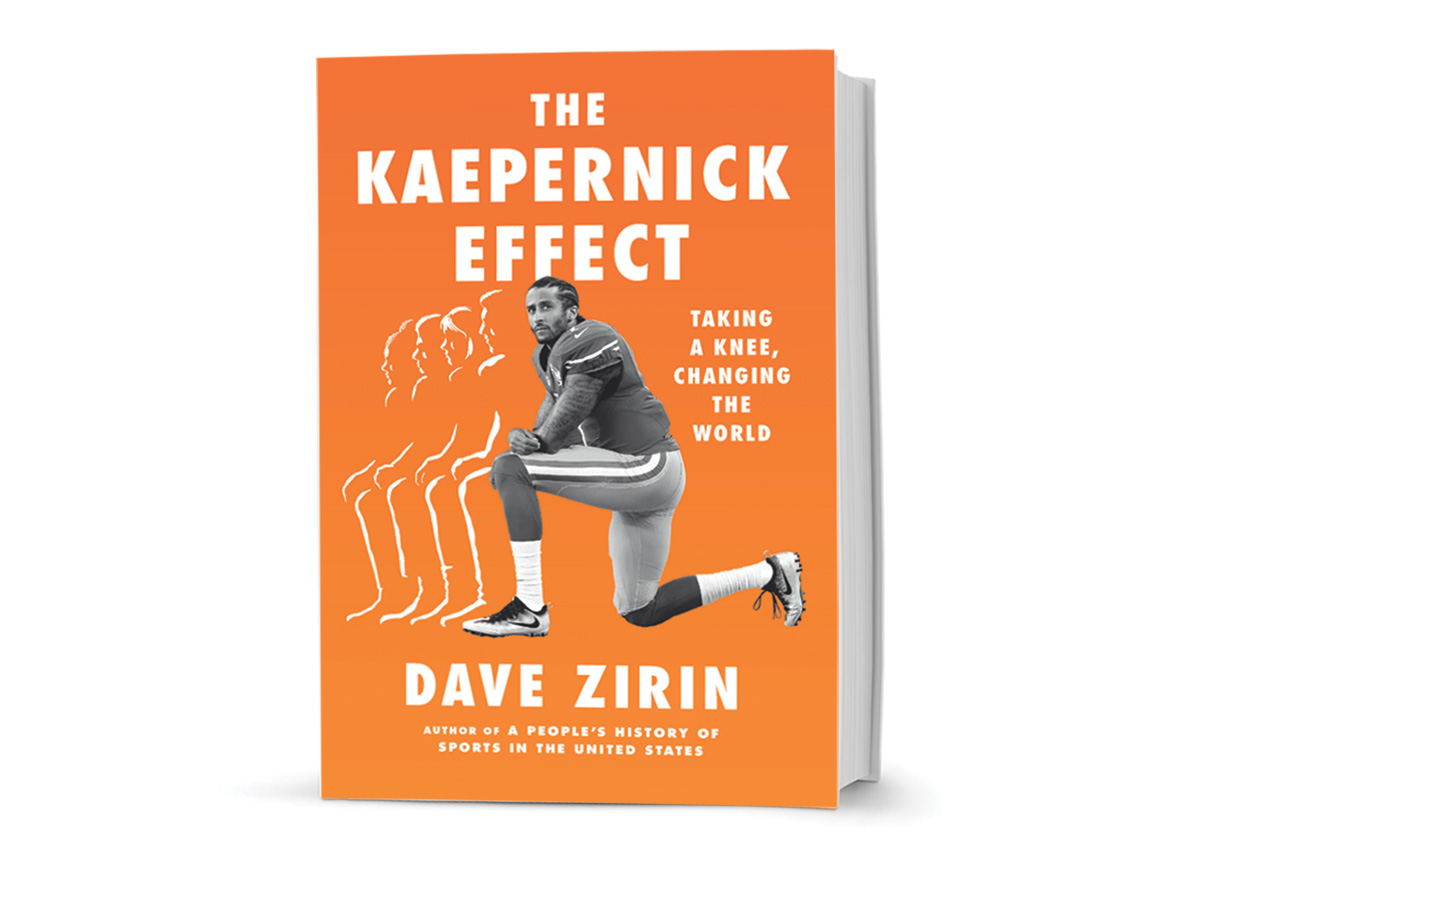 In Our Orbit: Dave Zirin’s “The Kaepernick Effect”